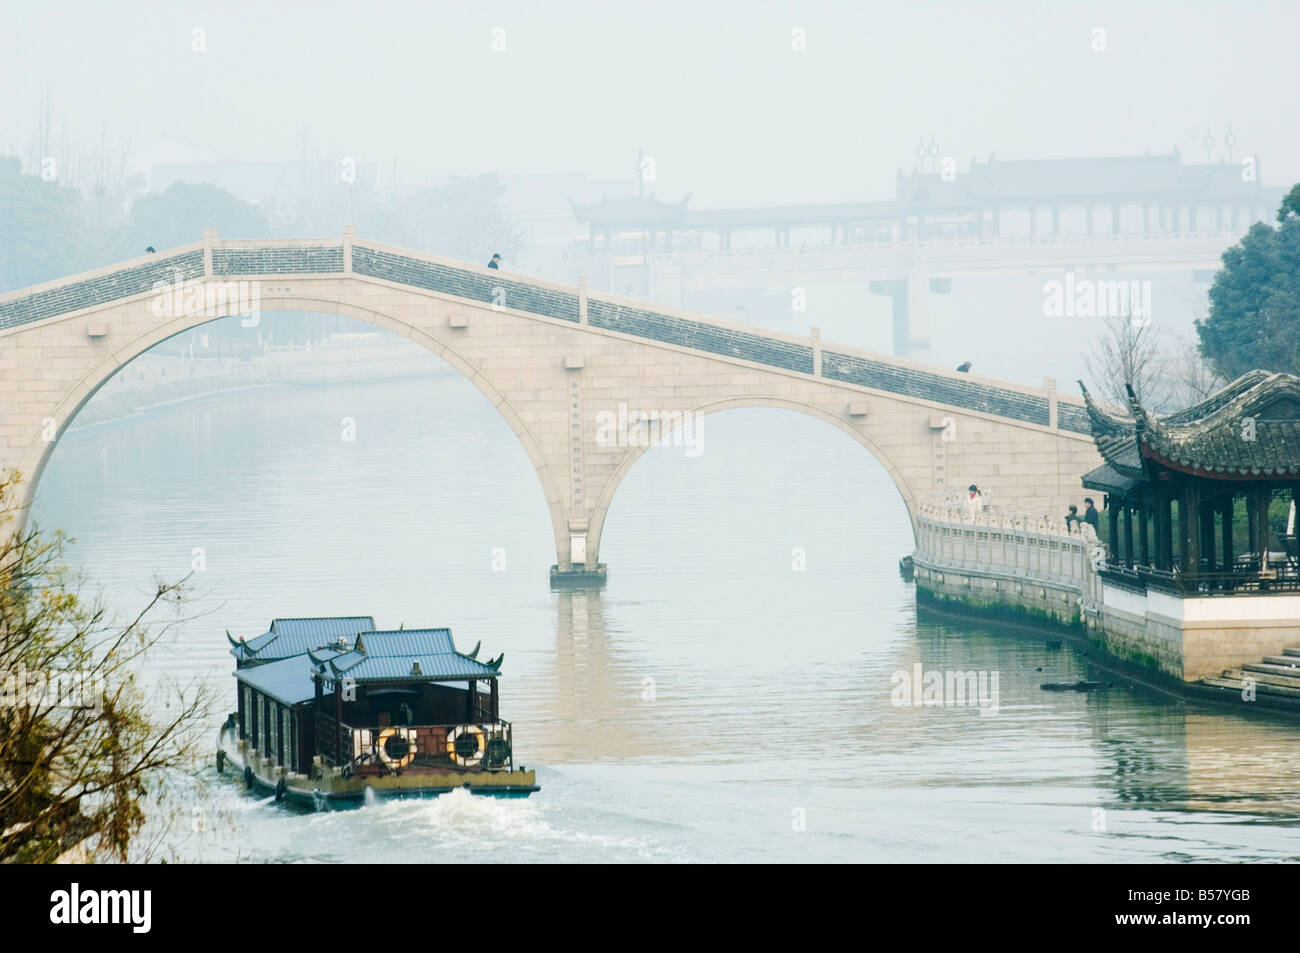 A boat passing through a stone arched bridge on Waicheng River with Wumen bridge behind, Suzhou, Jiangsu Province, China, Asia Stock Photo